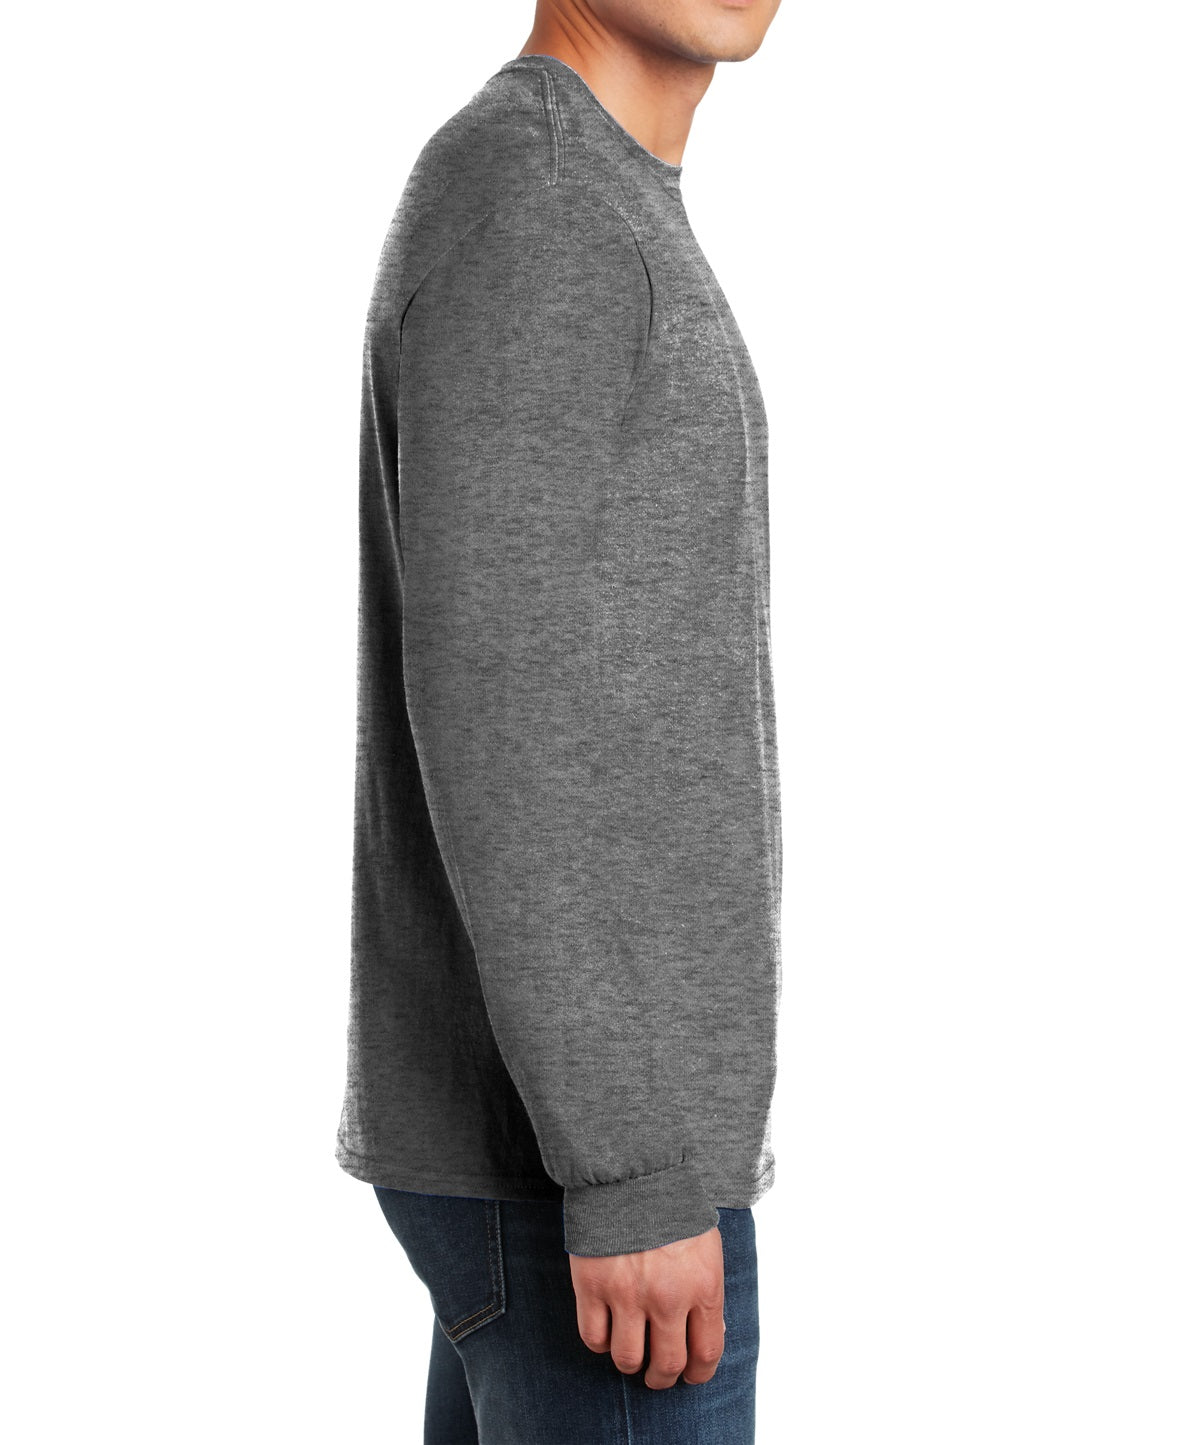 Camiseta de manga larga Gildan® 100% algodón 